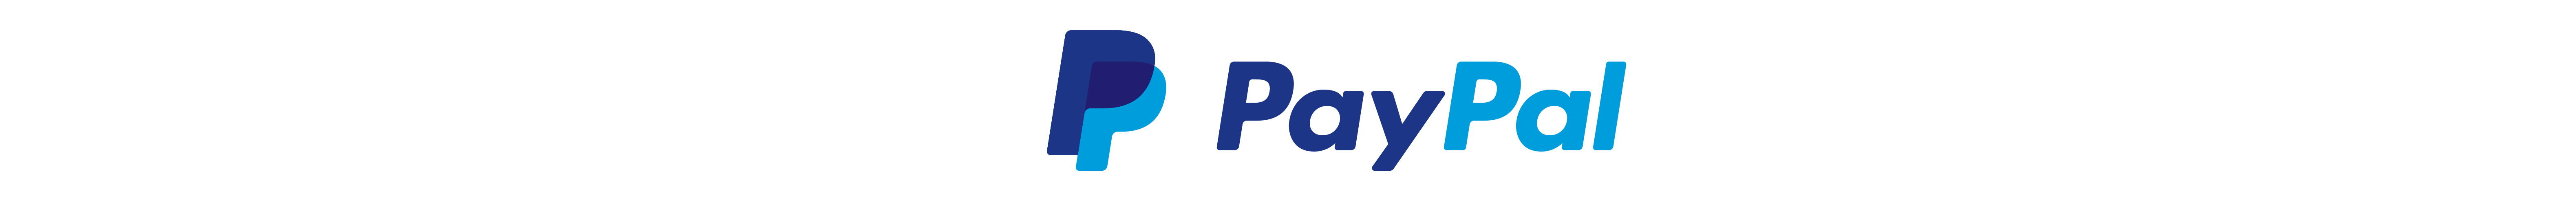 PayPal_margin